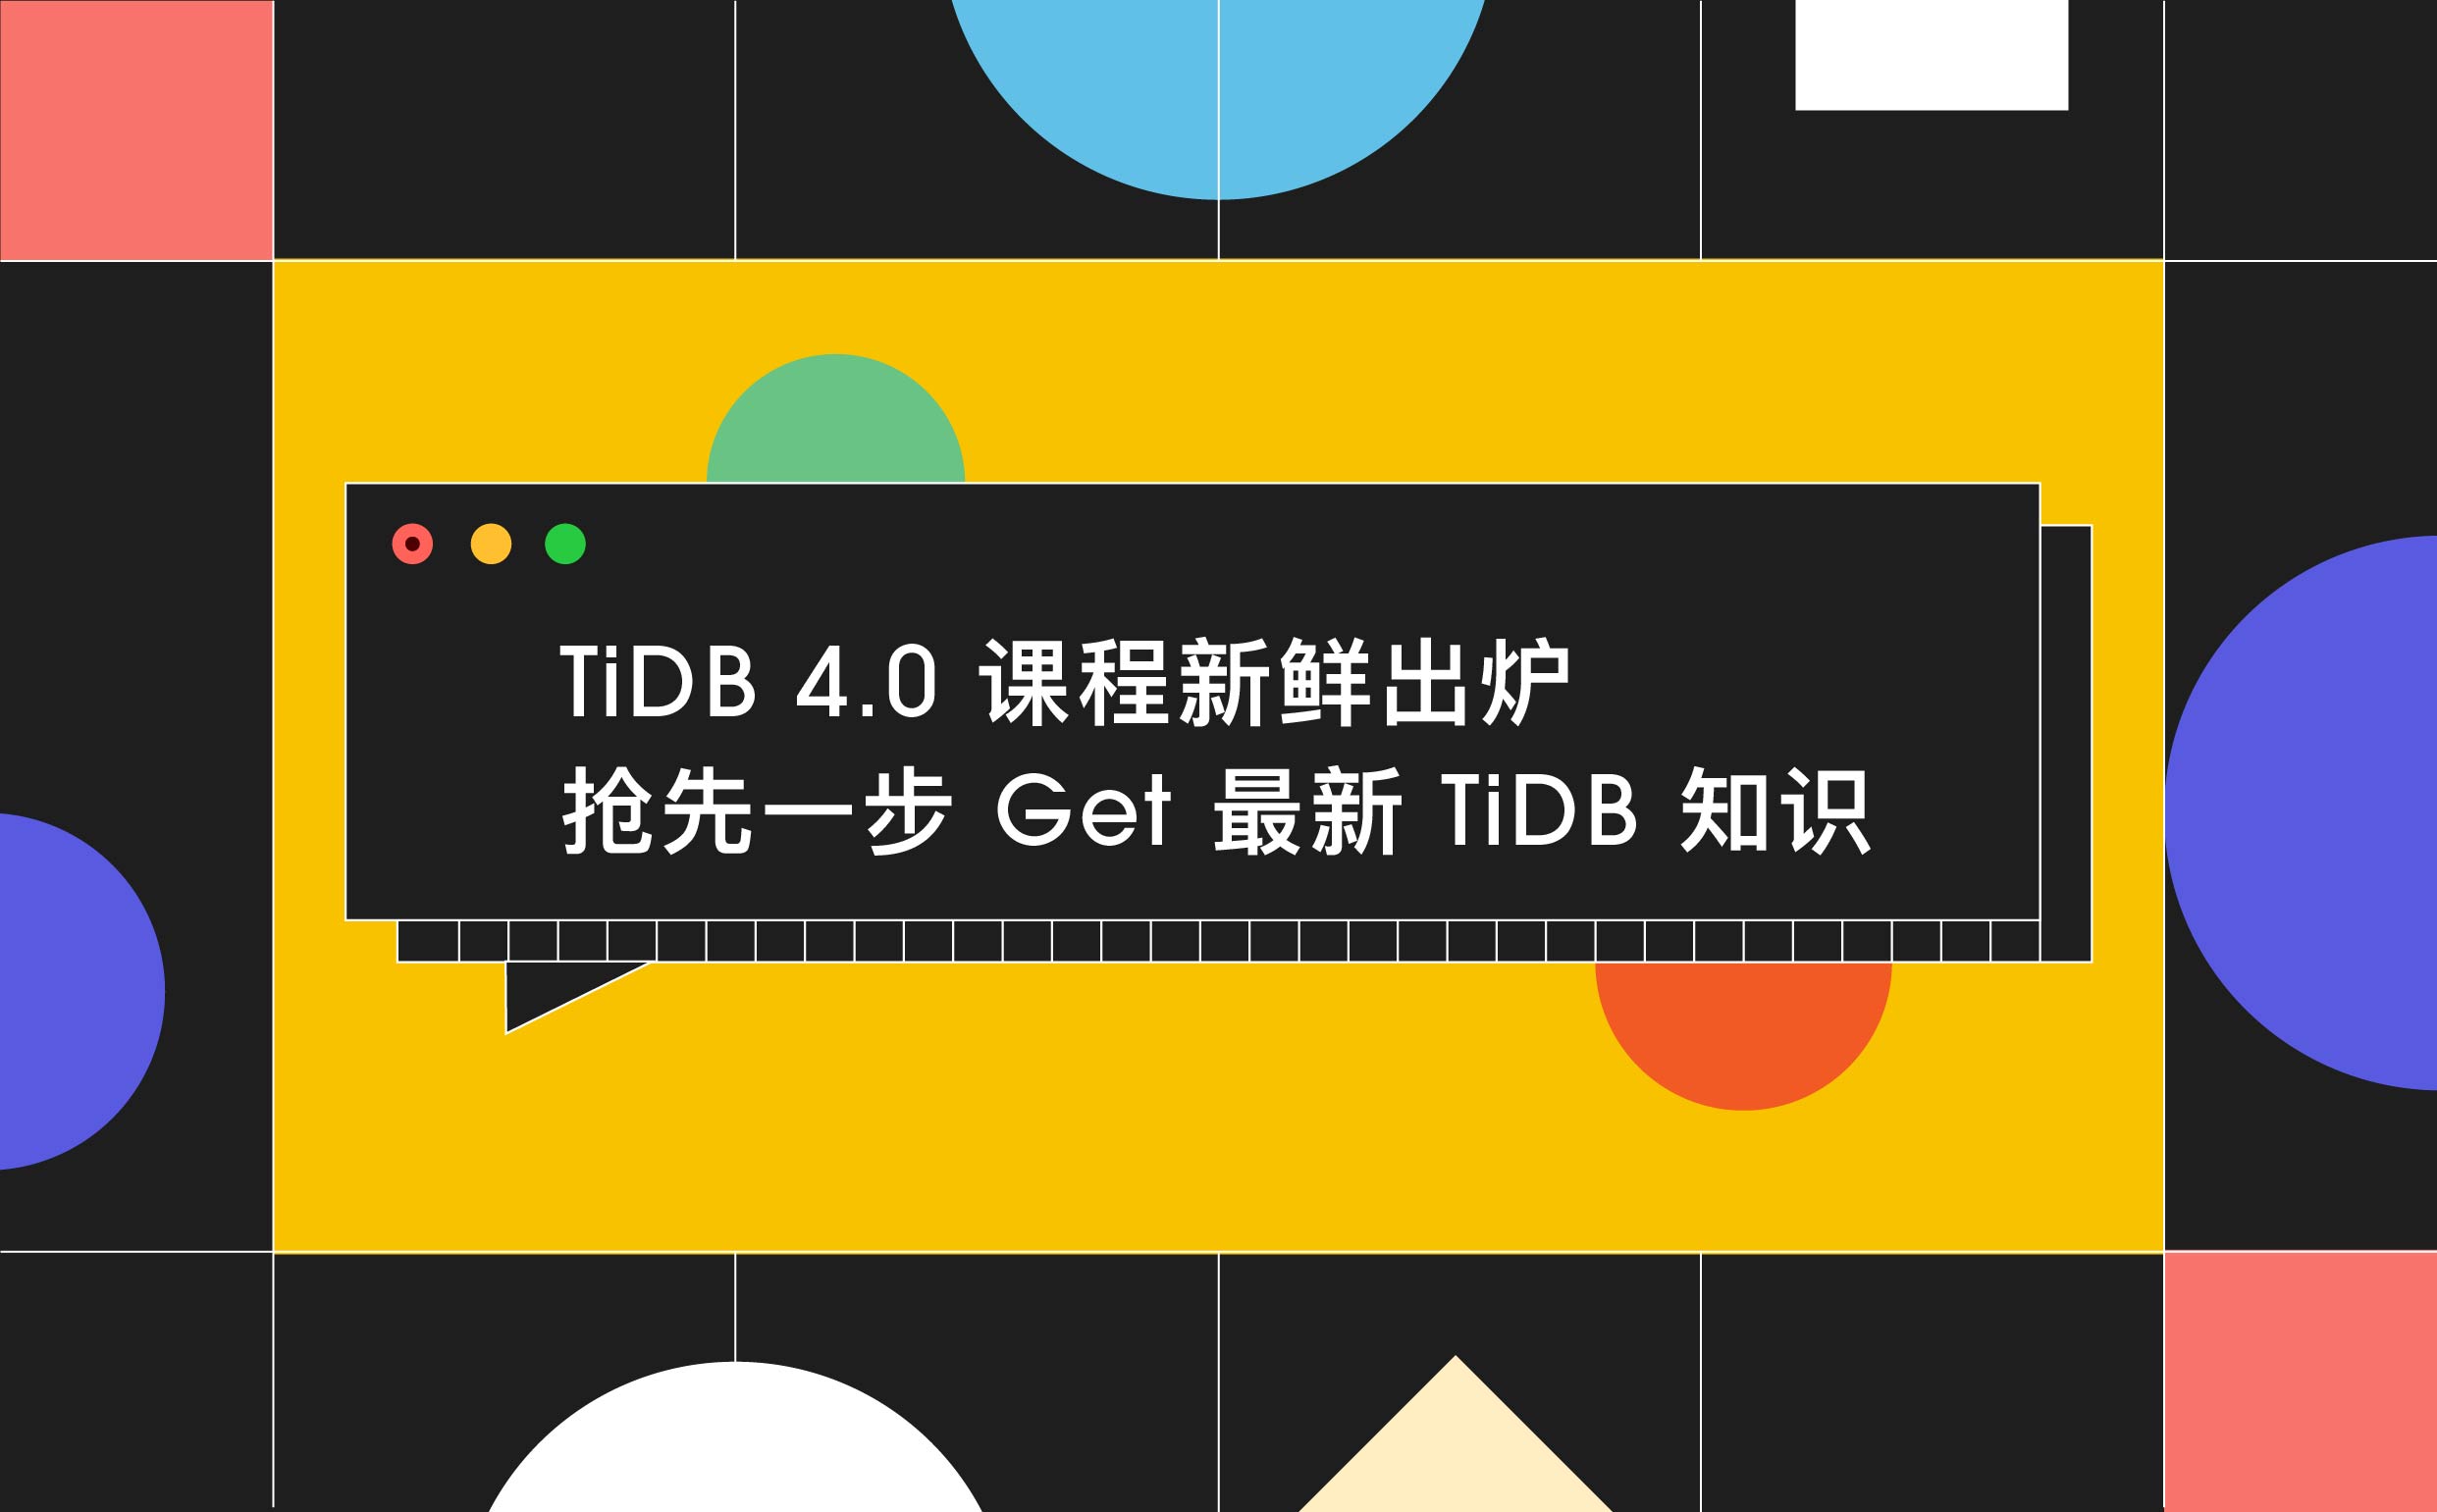 TiDB 4.0 Courses